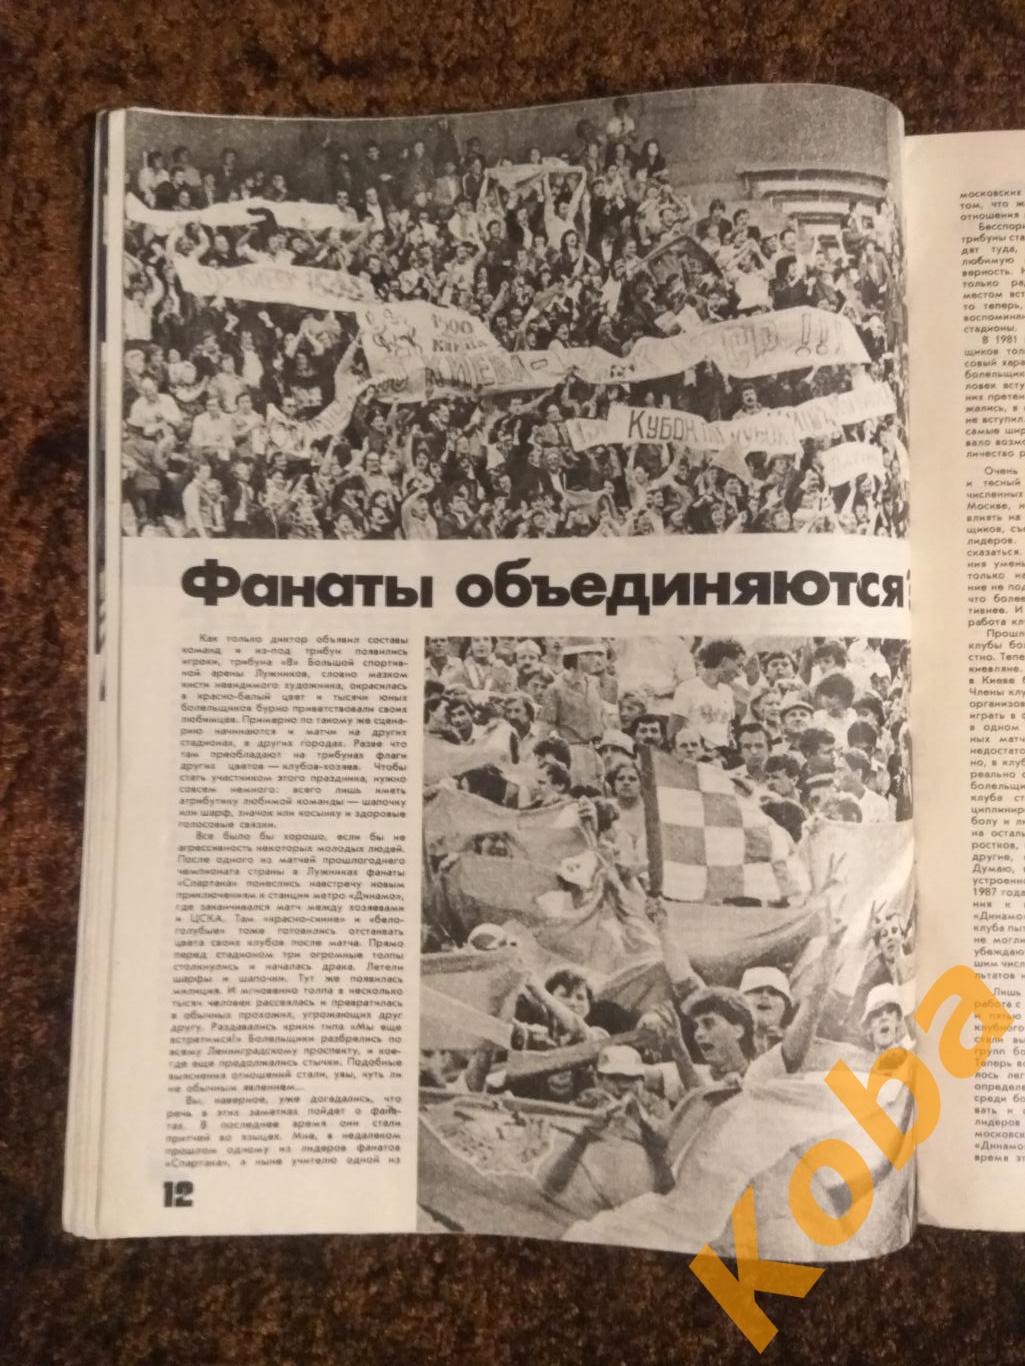 Фанаты Футбол Хоккей Мыльников Олимпиада Калгари 88 Физкультура и спорт 1988 №5 1